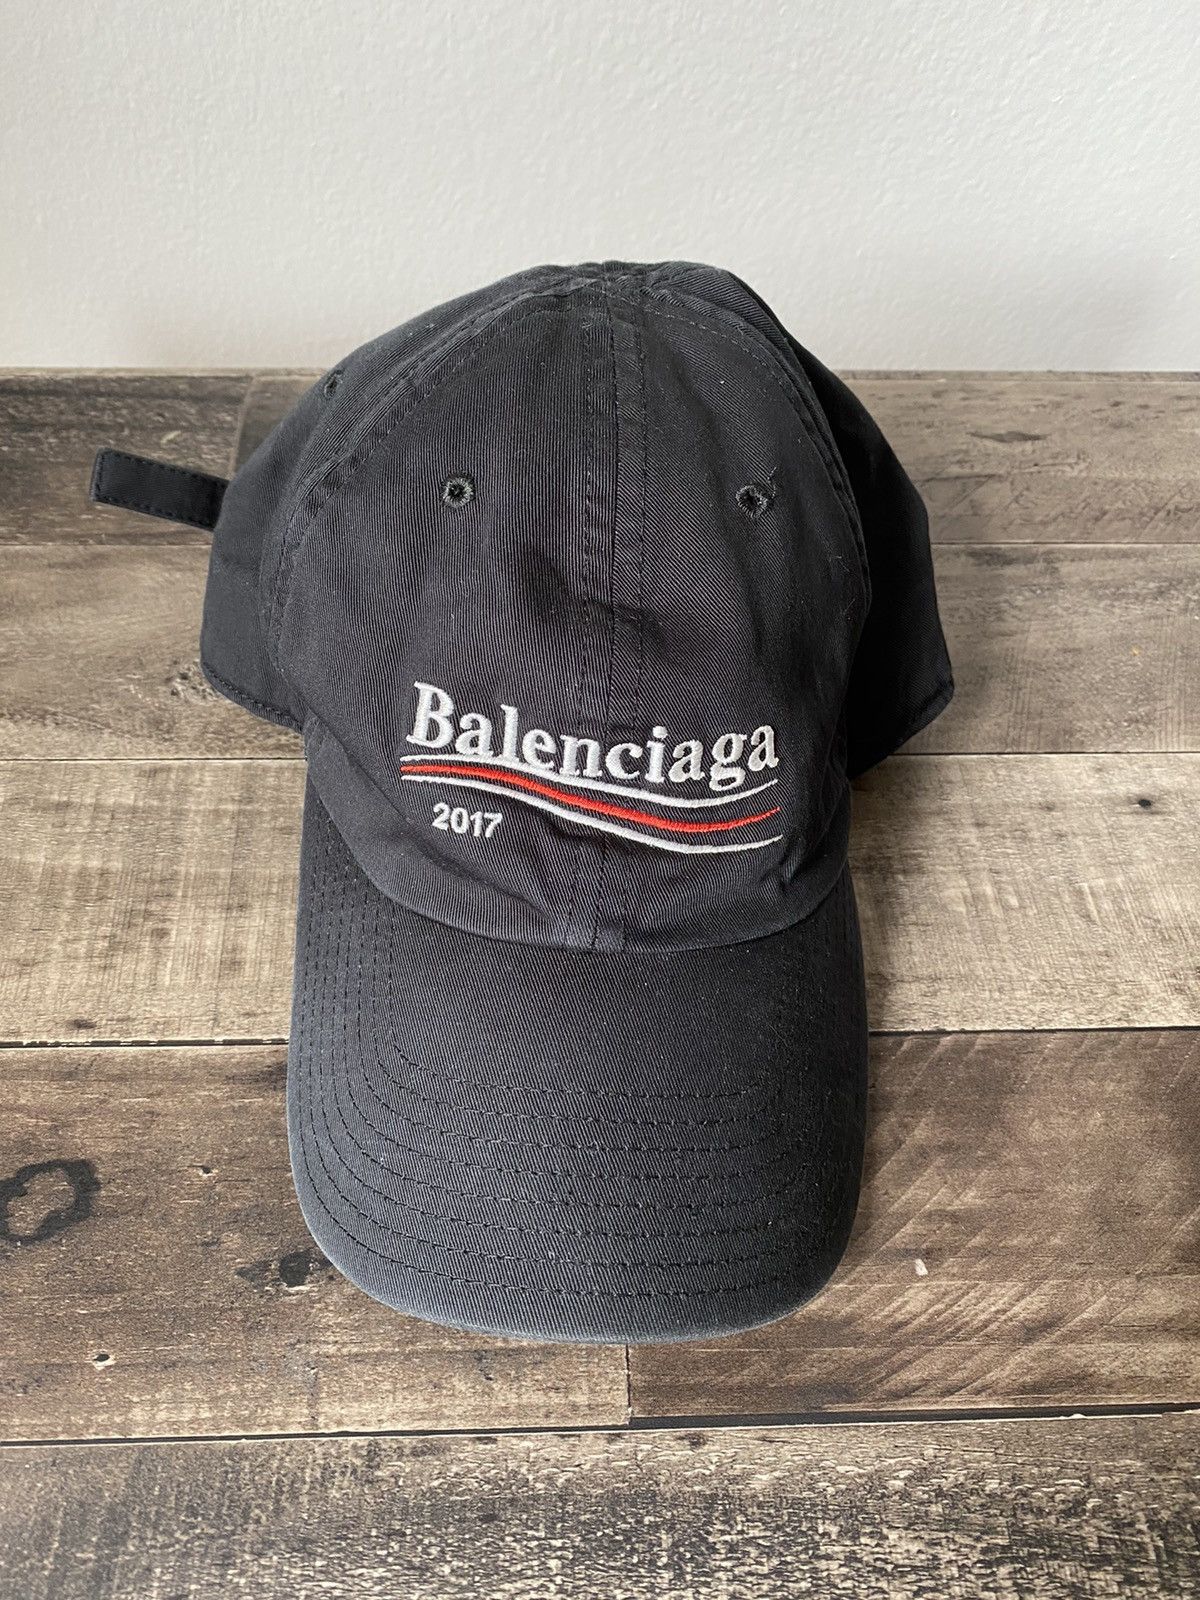 meteor Og så videre svulst Balenciaga Balenciaga 2017 Campaign Hat | Grailed